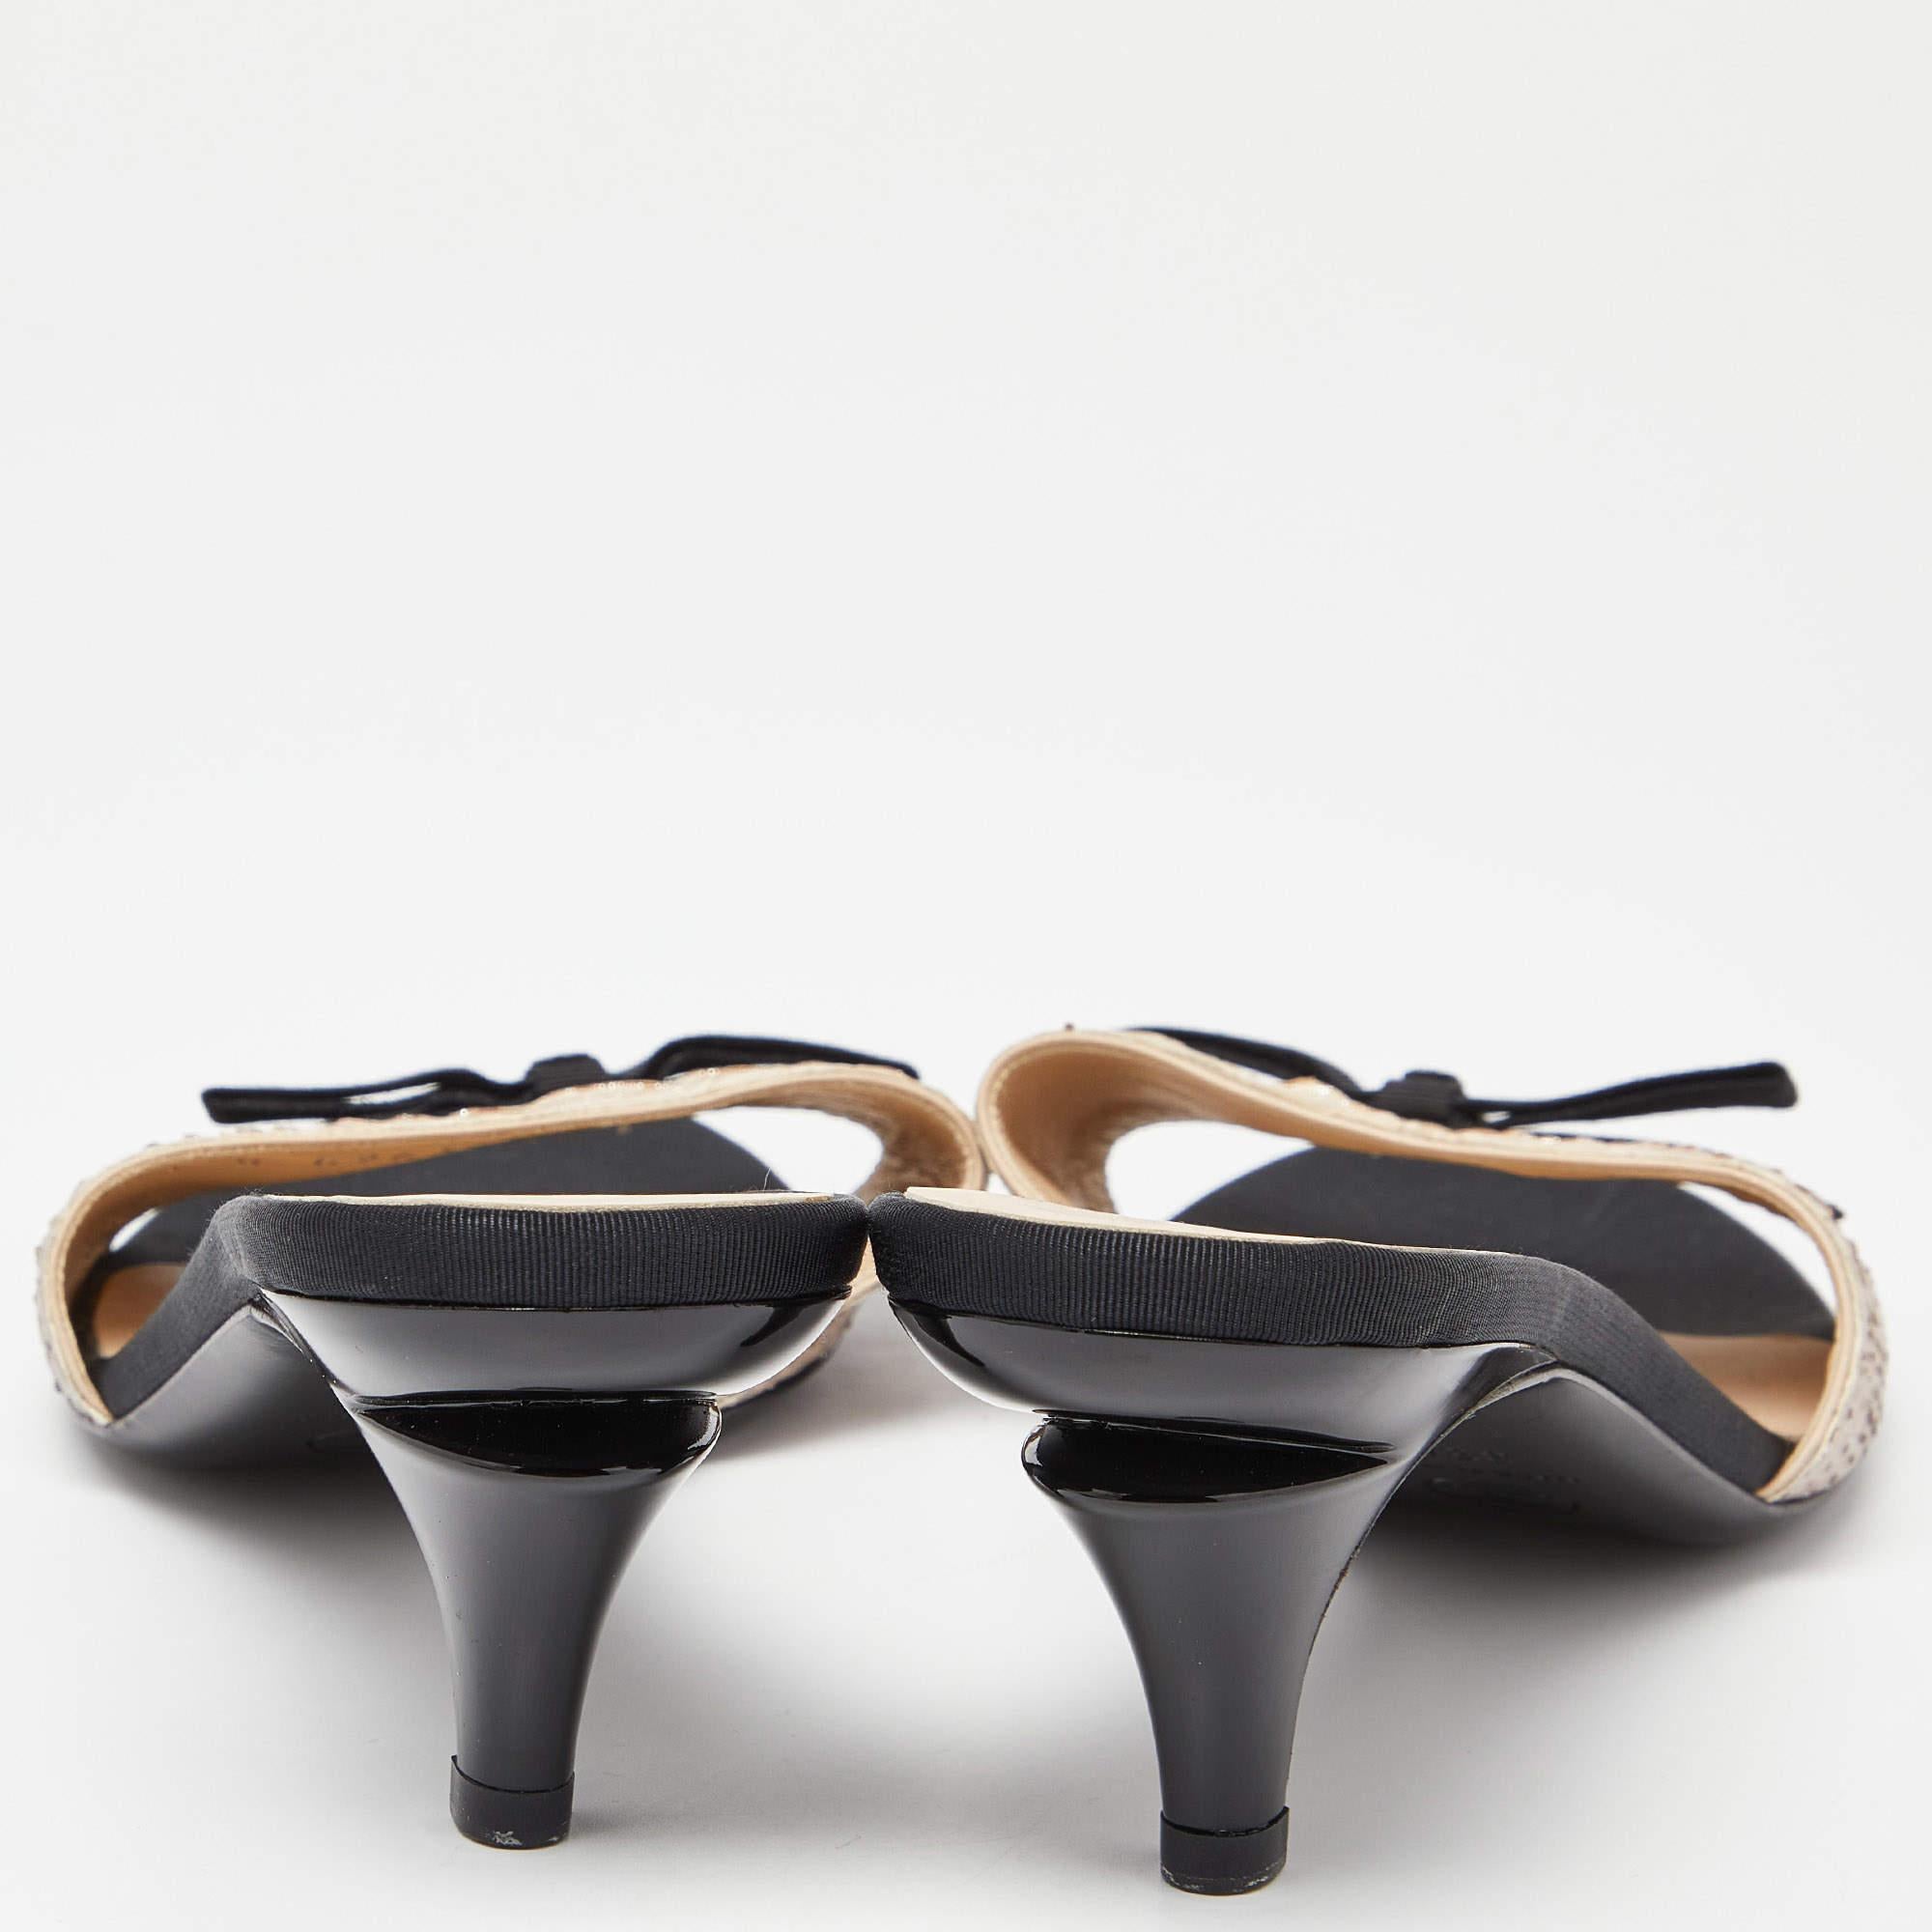 Chanel Metallic/Black Python and Fabric Bow CC Slide Sandals Size 38.5 4